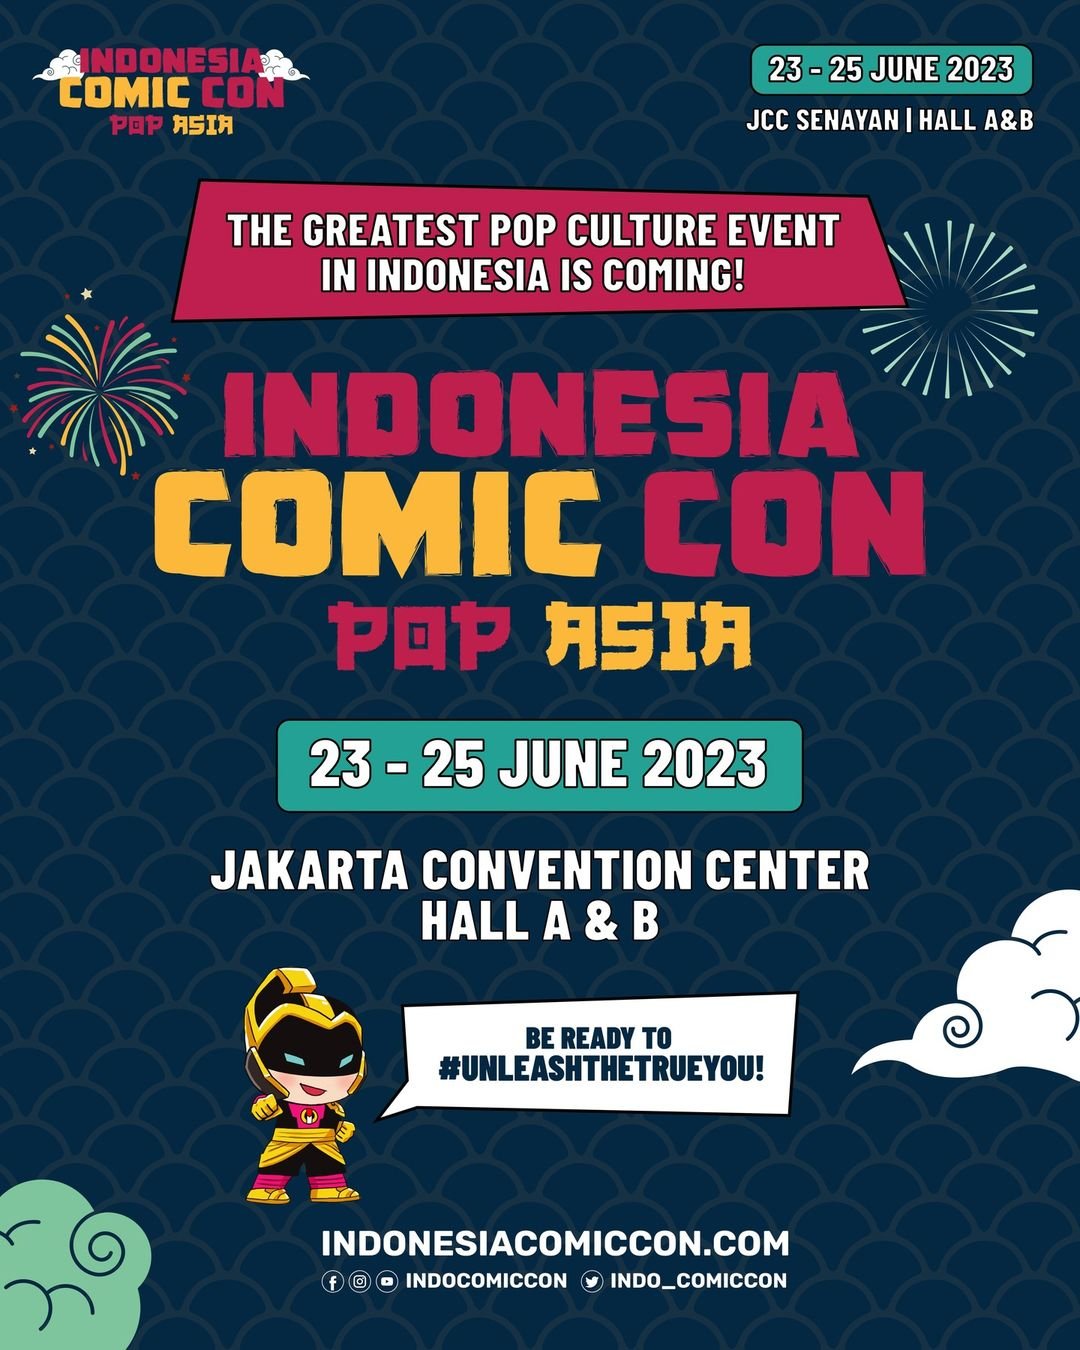 Indonesia Comic Con Pop Asia